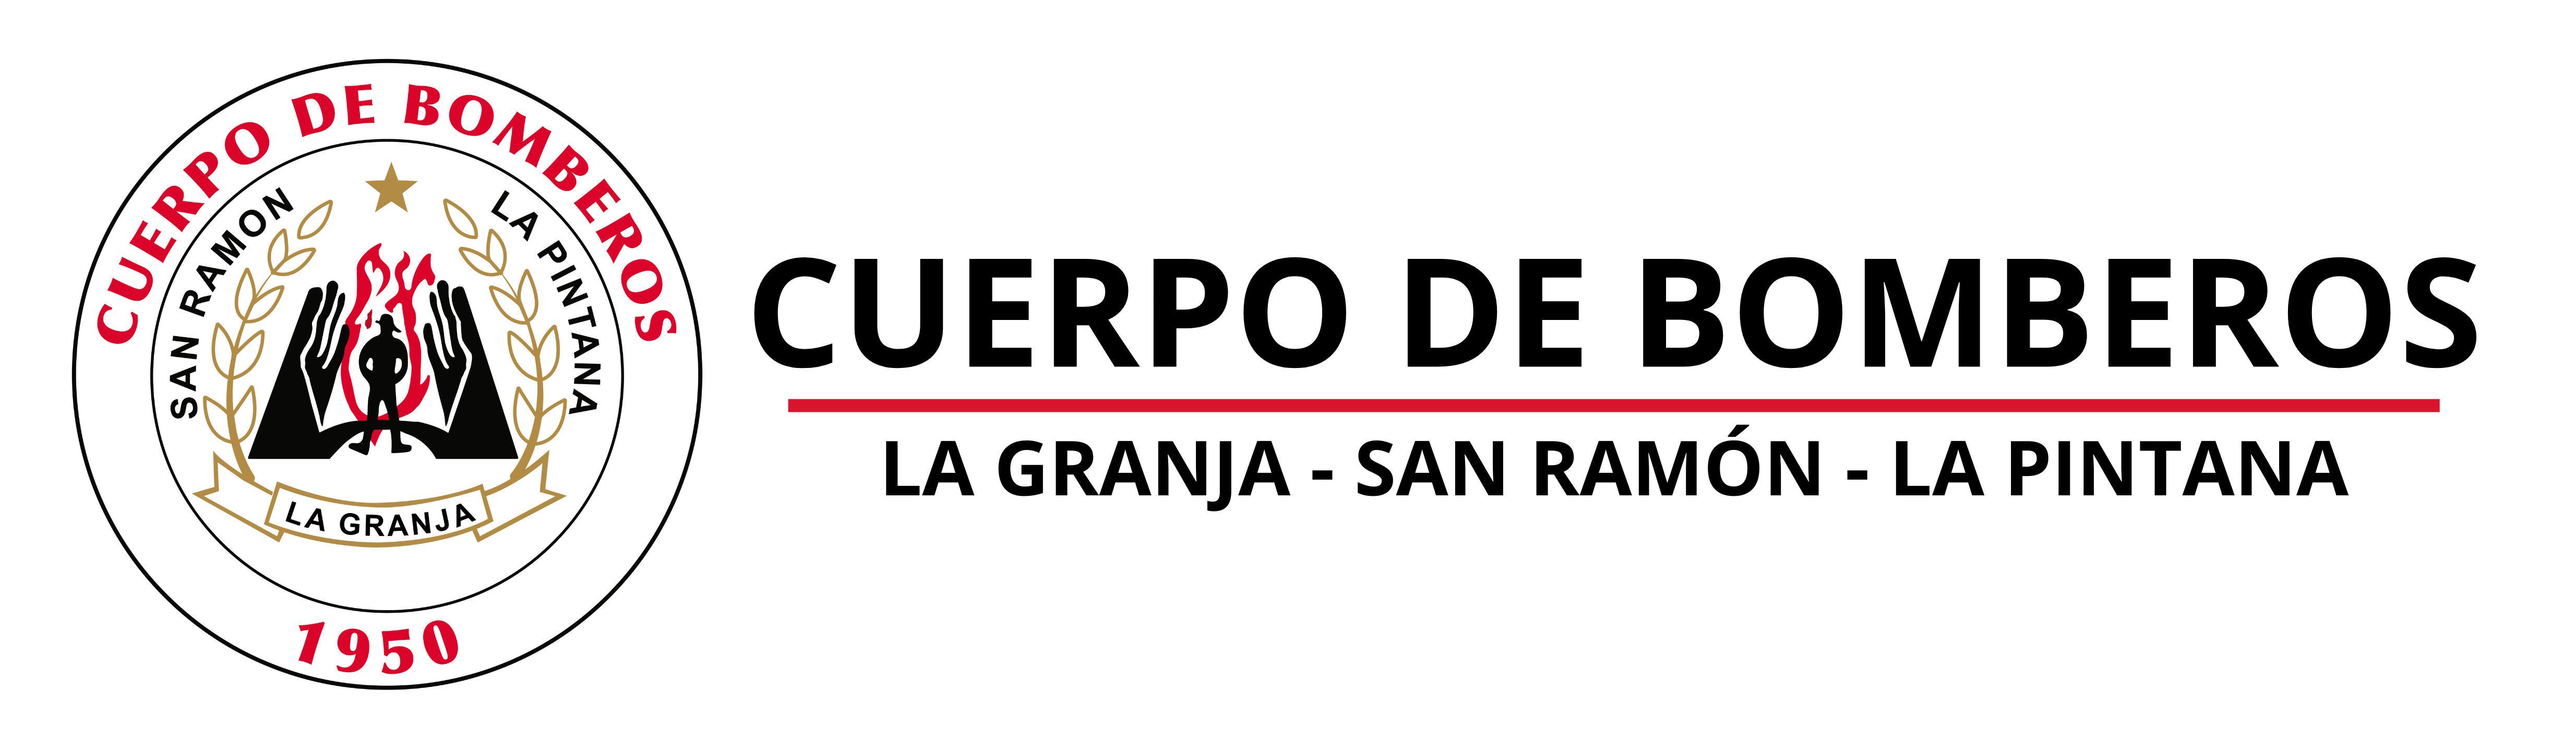 Cuerpo de Bomberos de La Granja – San Ramón – La Pintana